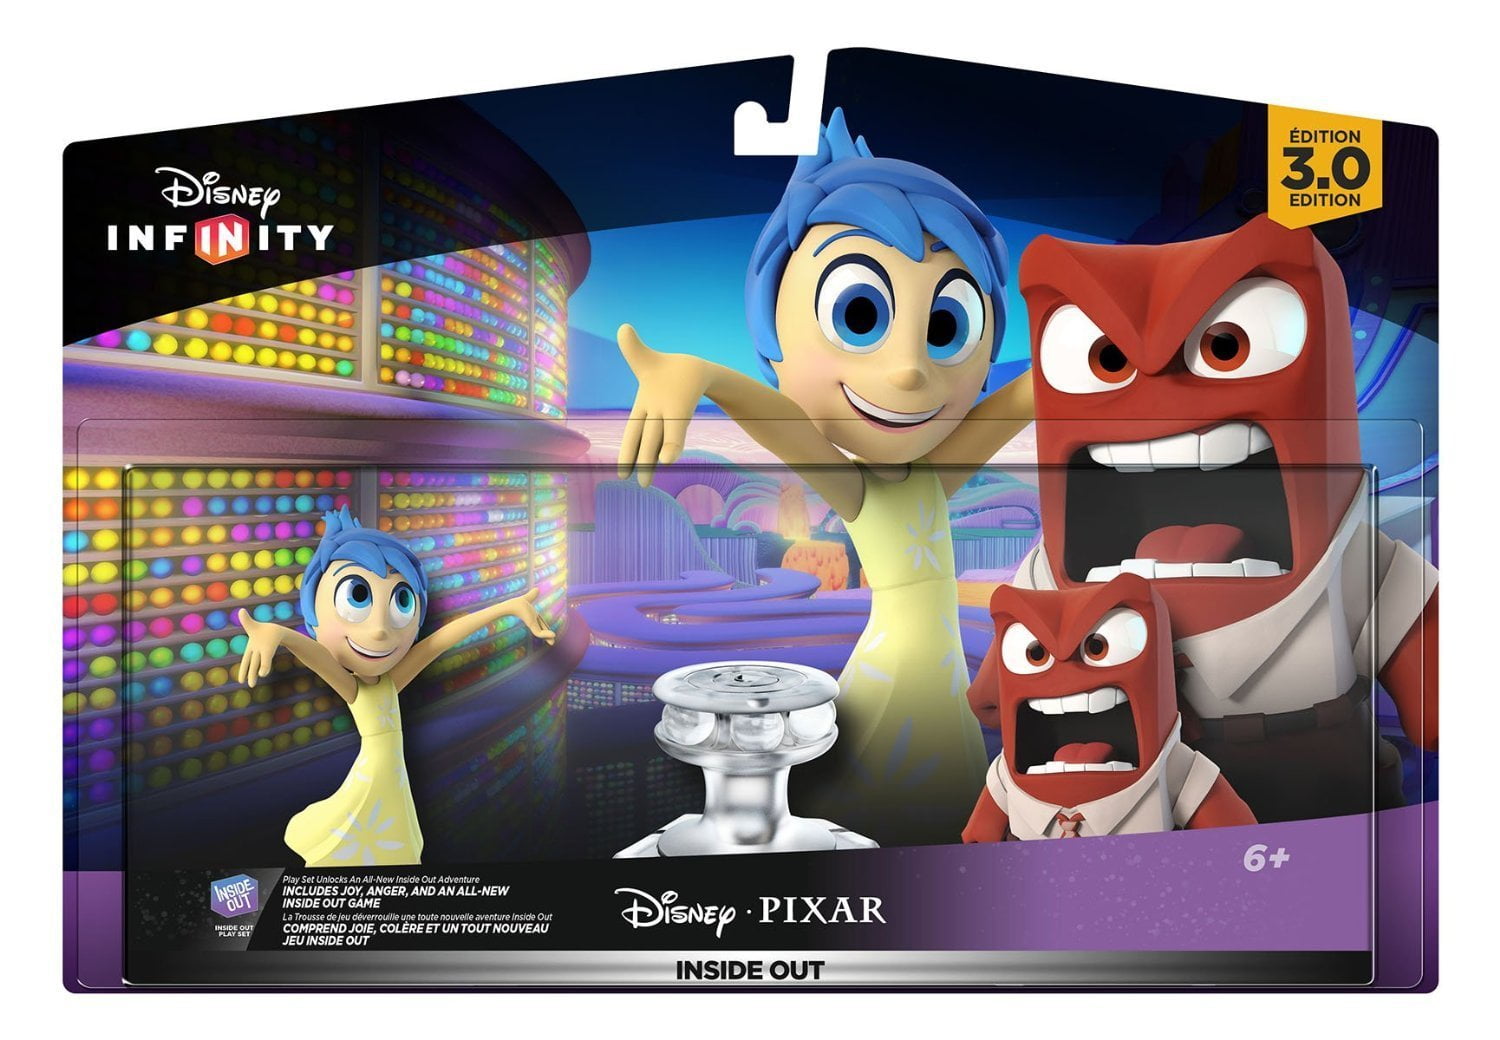 Klap Veranderlijk Manier Disney Infinity 3.0 Edition: Disney Pixar's Inside Out Play Set -  Walmart.com